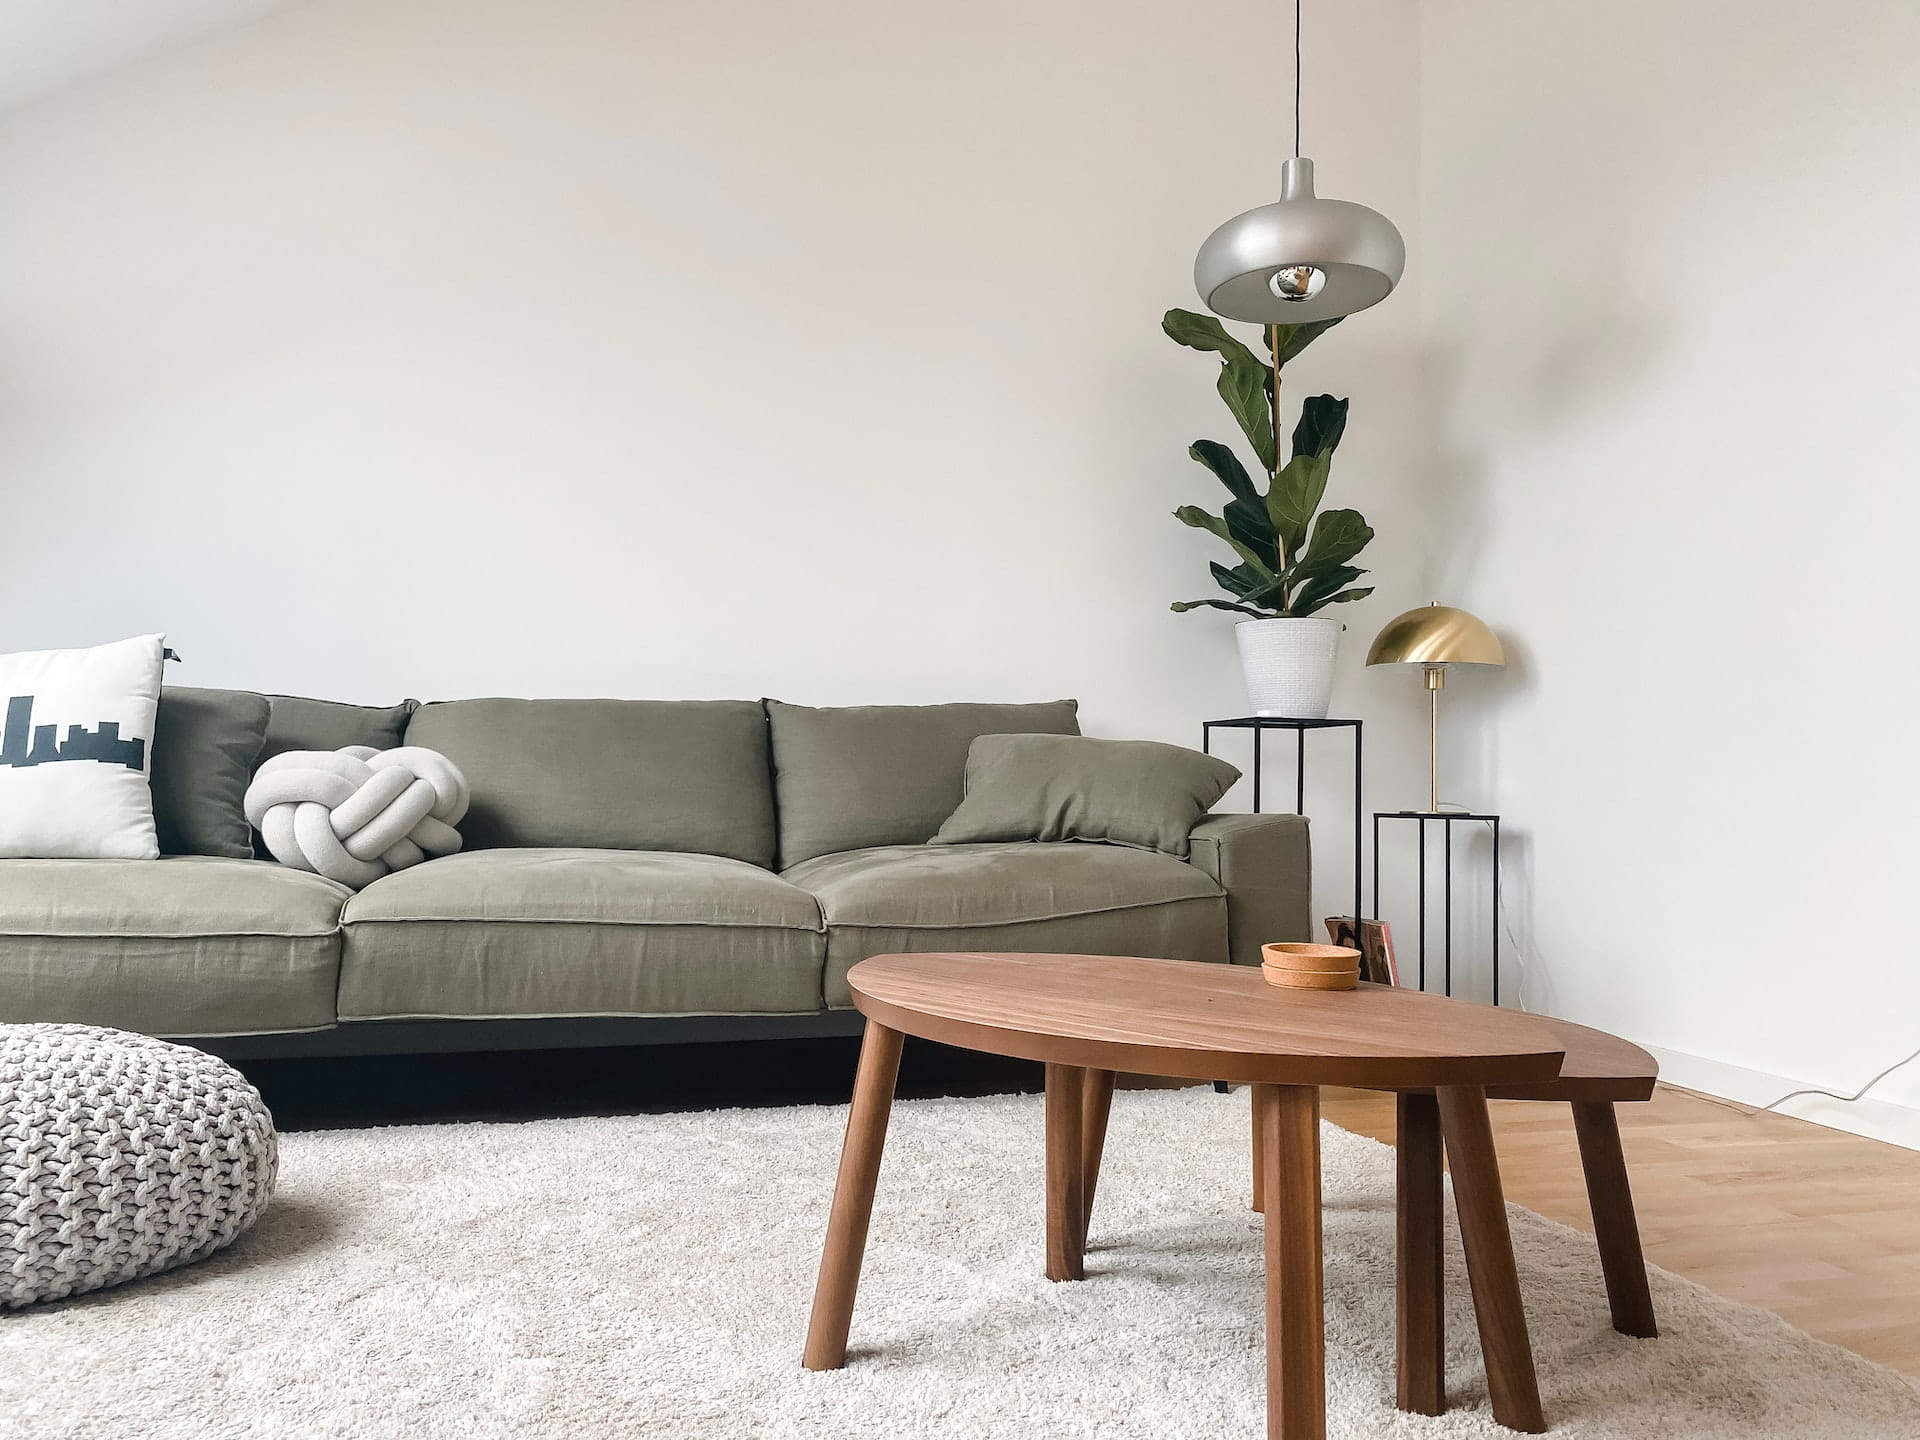 Interior Design - Living Room